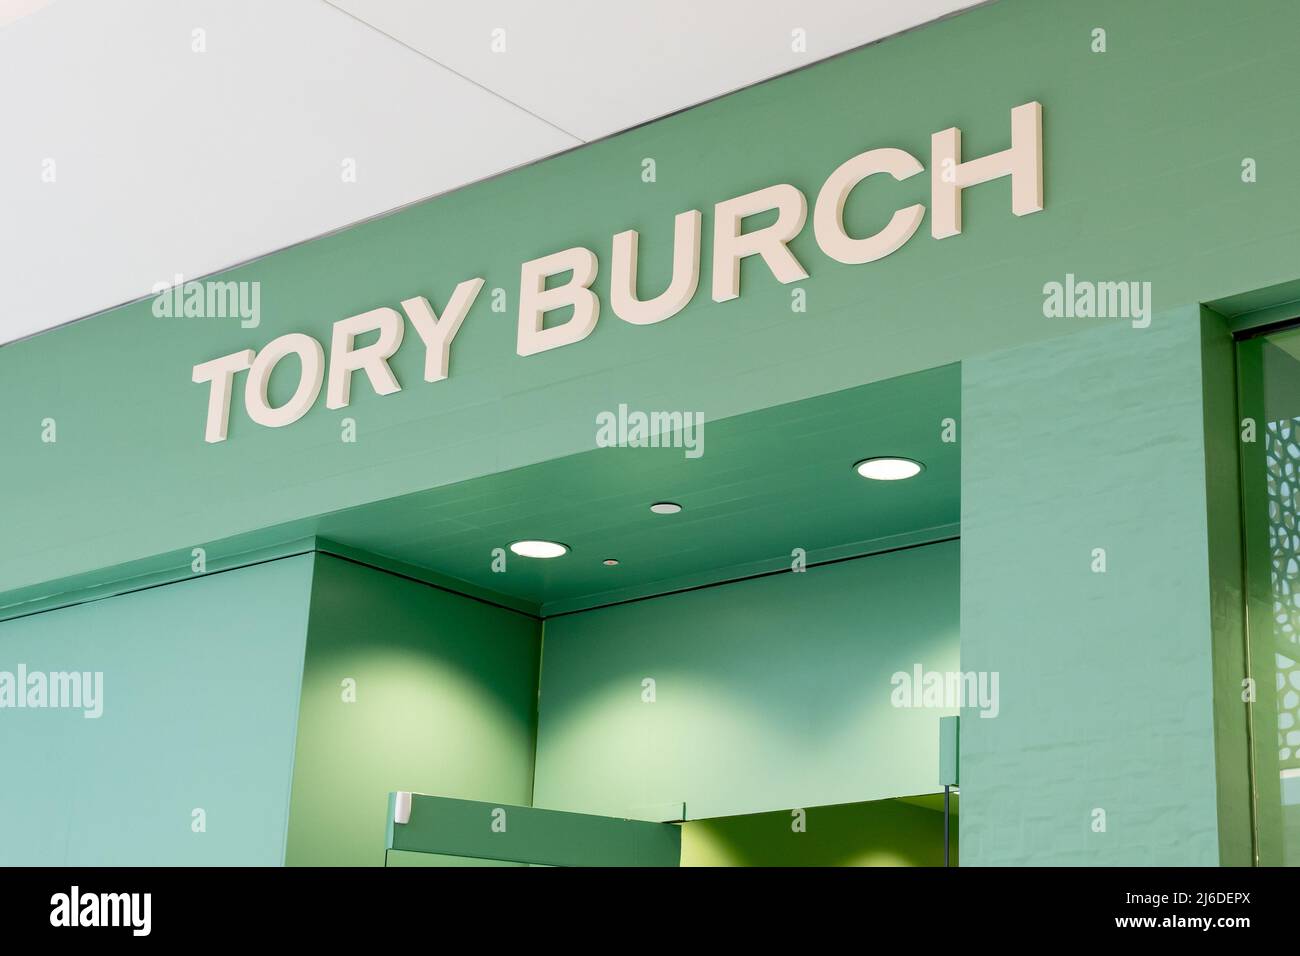 Tory Burch Stock Illustrations – 14 Tory Burch Stock Illustrations